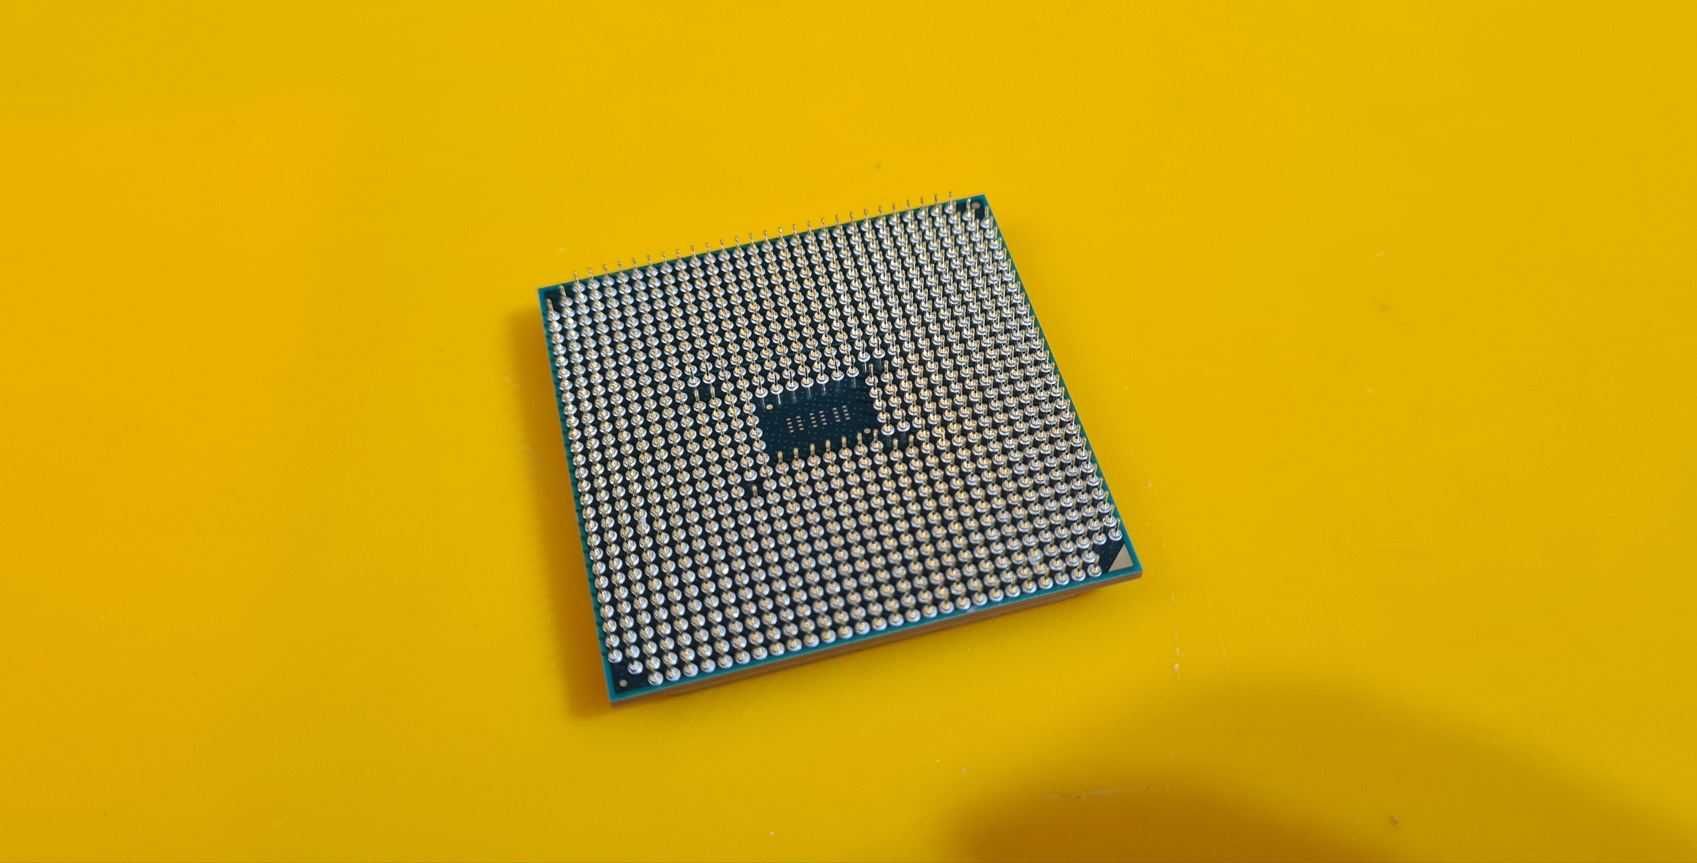 Procesor AMD A8-7600,3,10Ghz Turbo 3,80Ghz,Socket FM2+